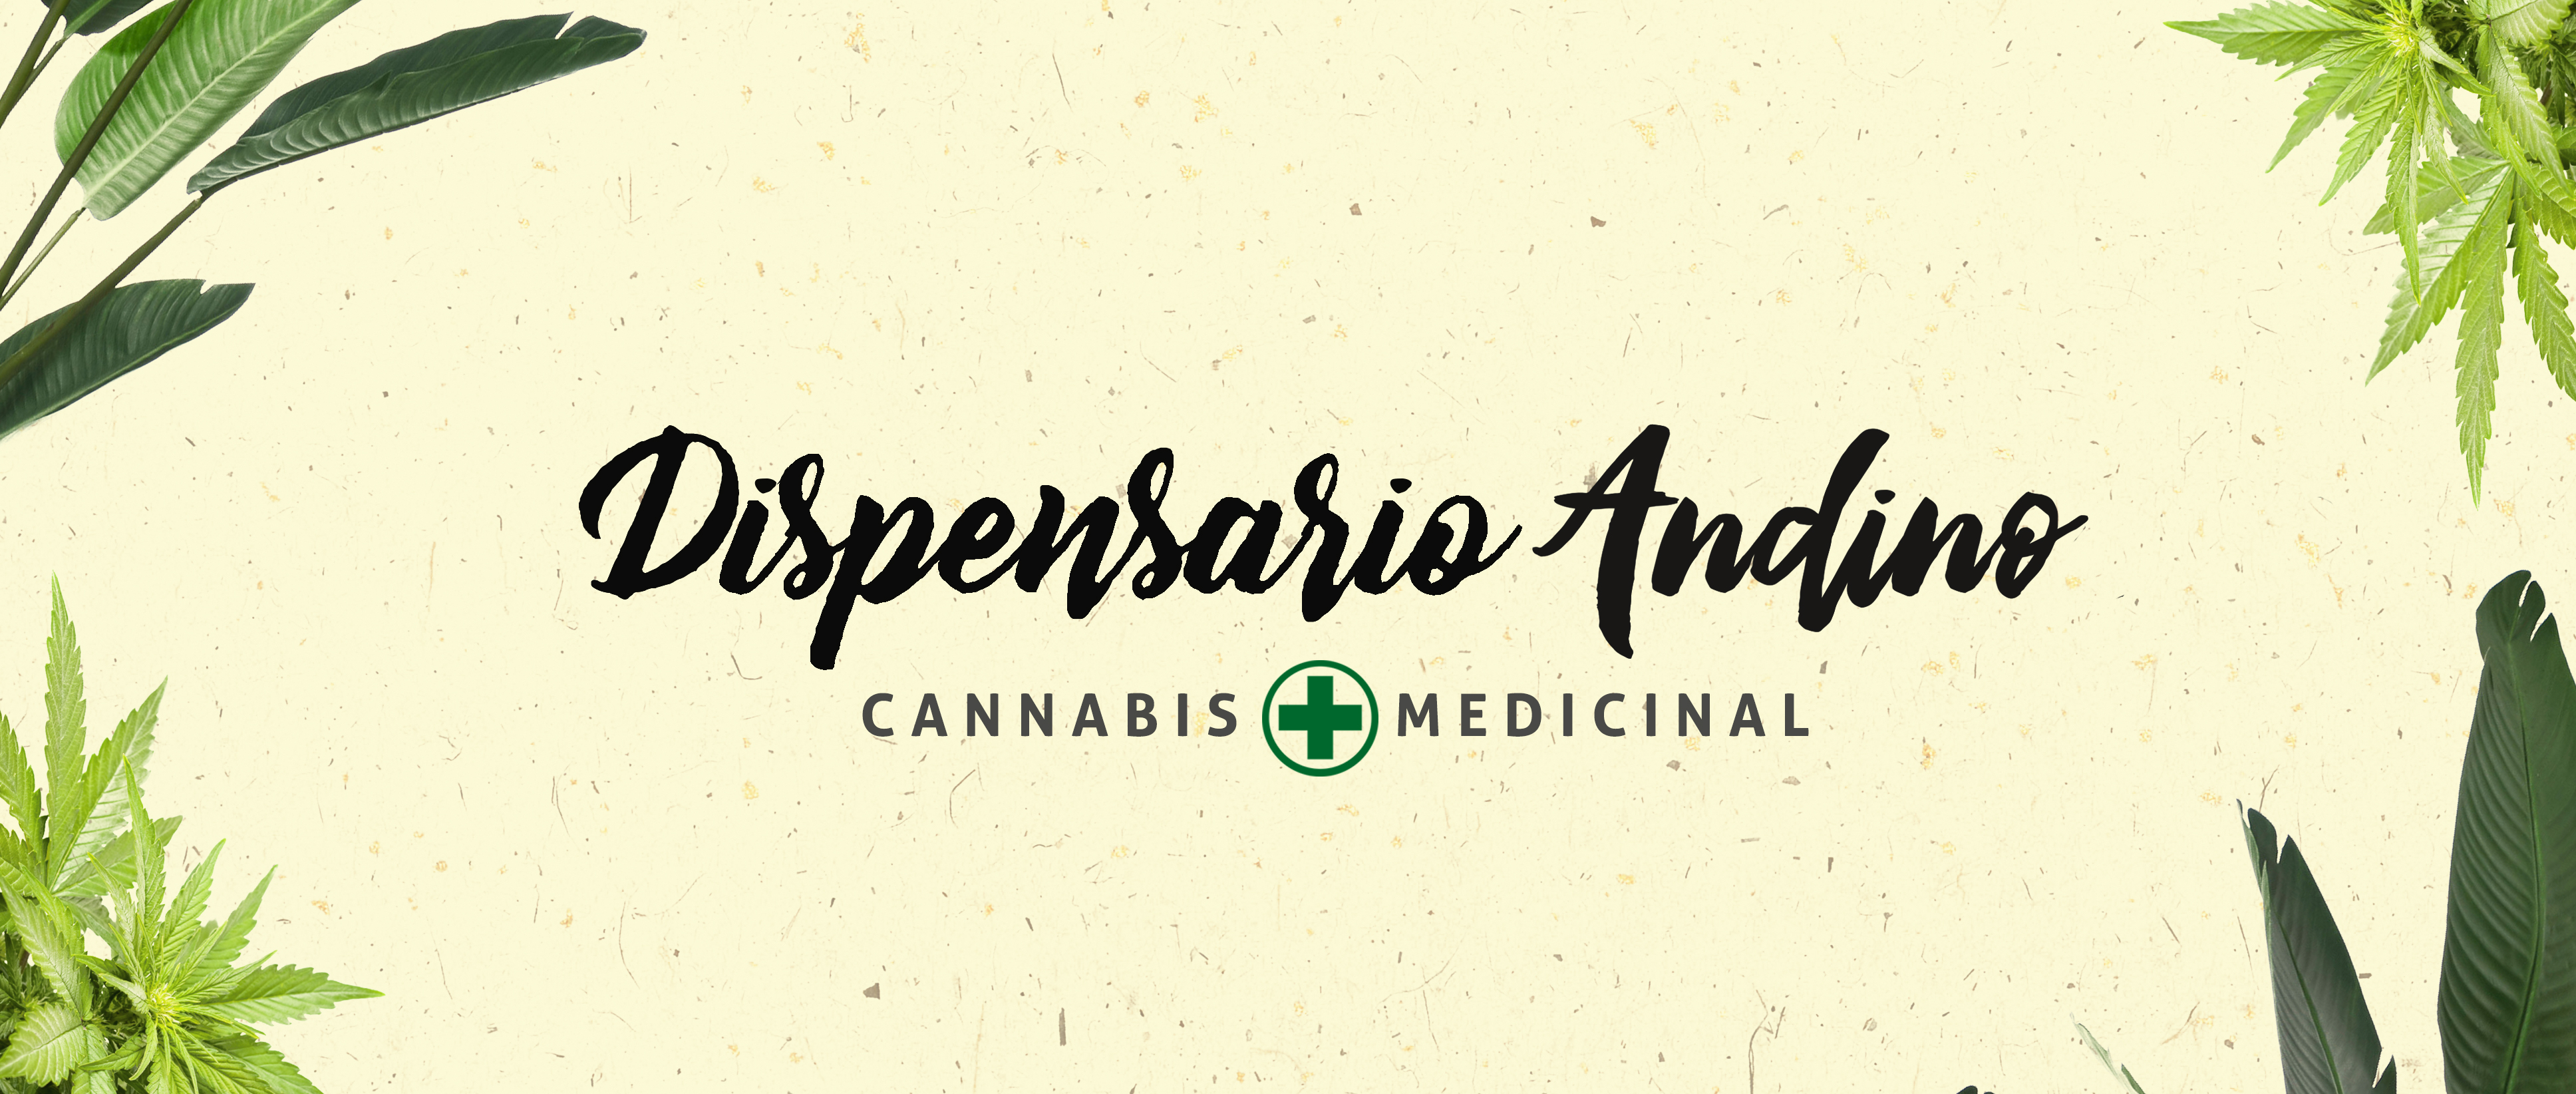 dispensarioandino-marihuana-medicinal-club-cannabico